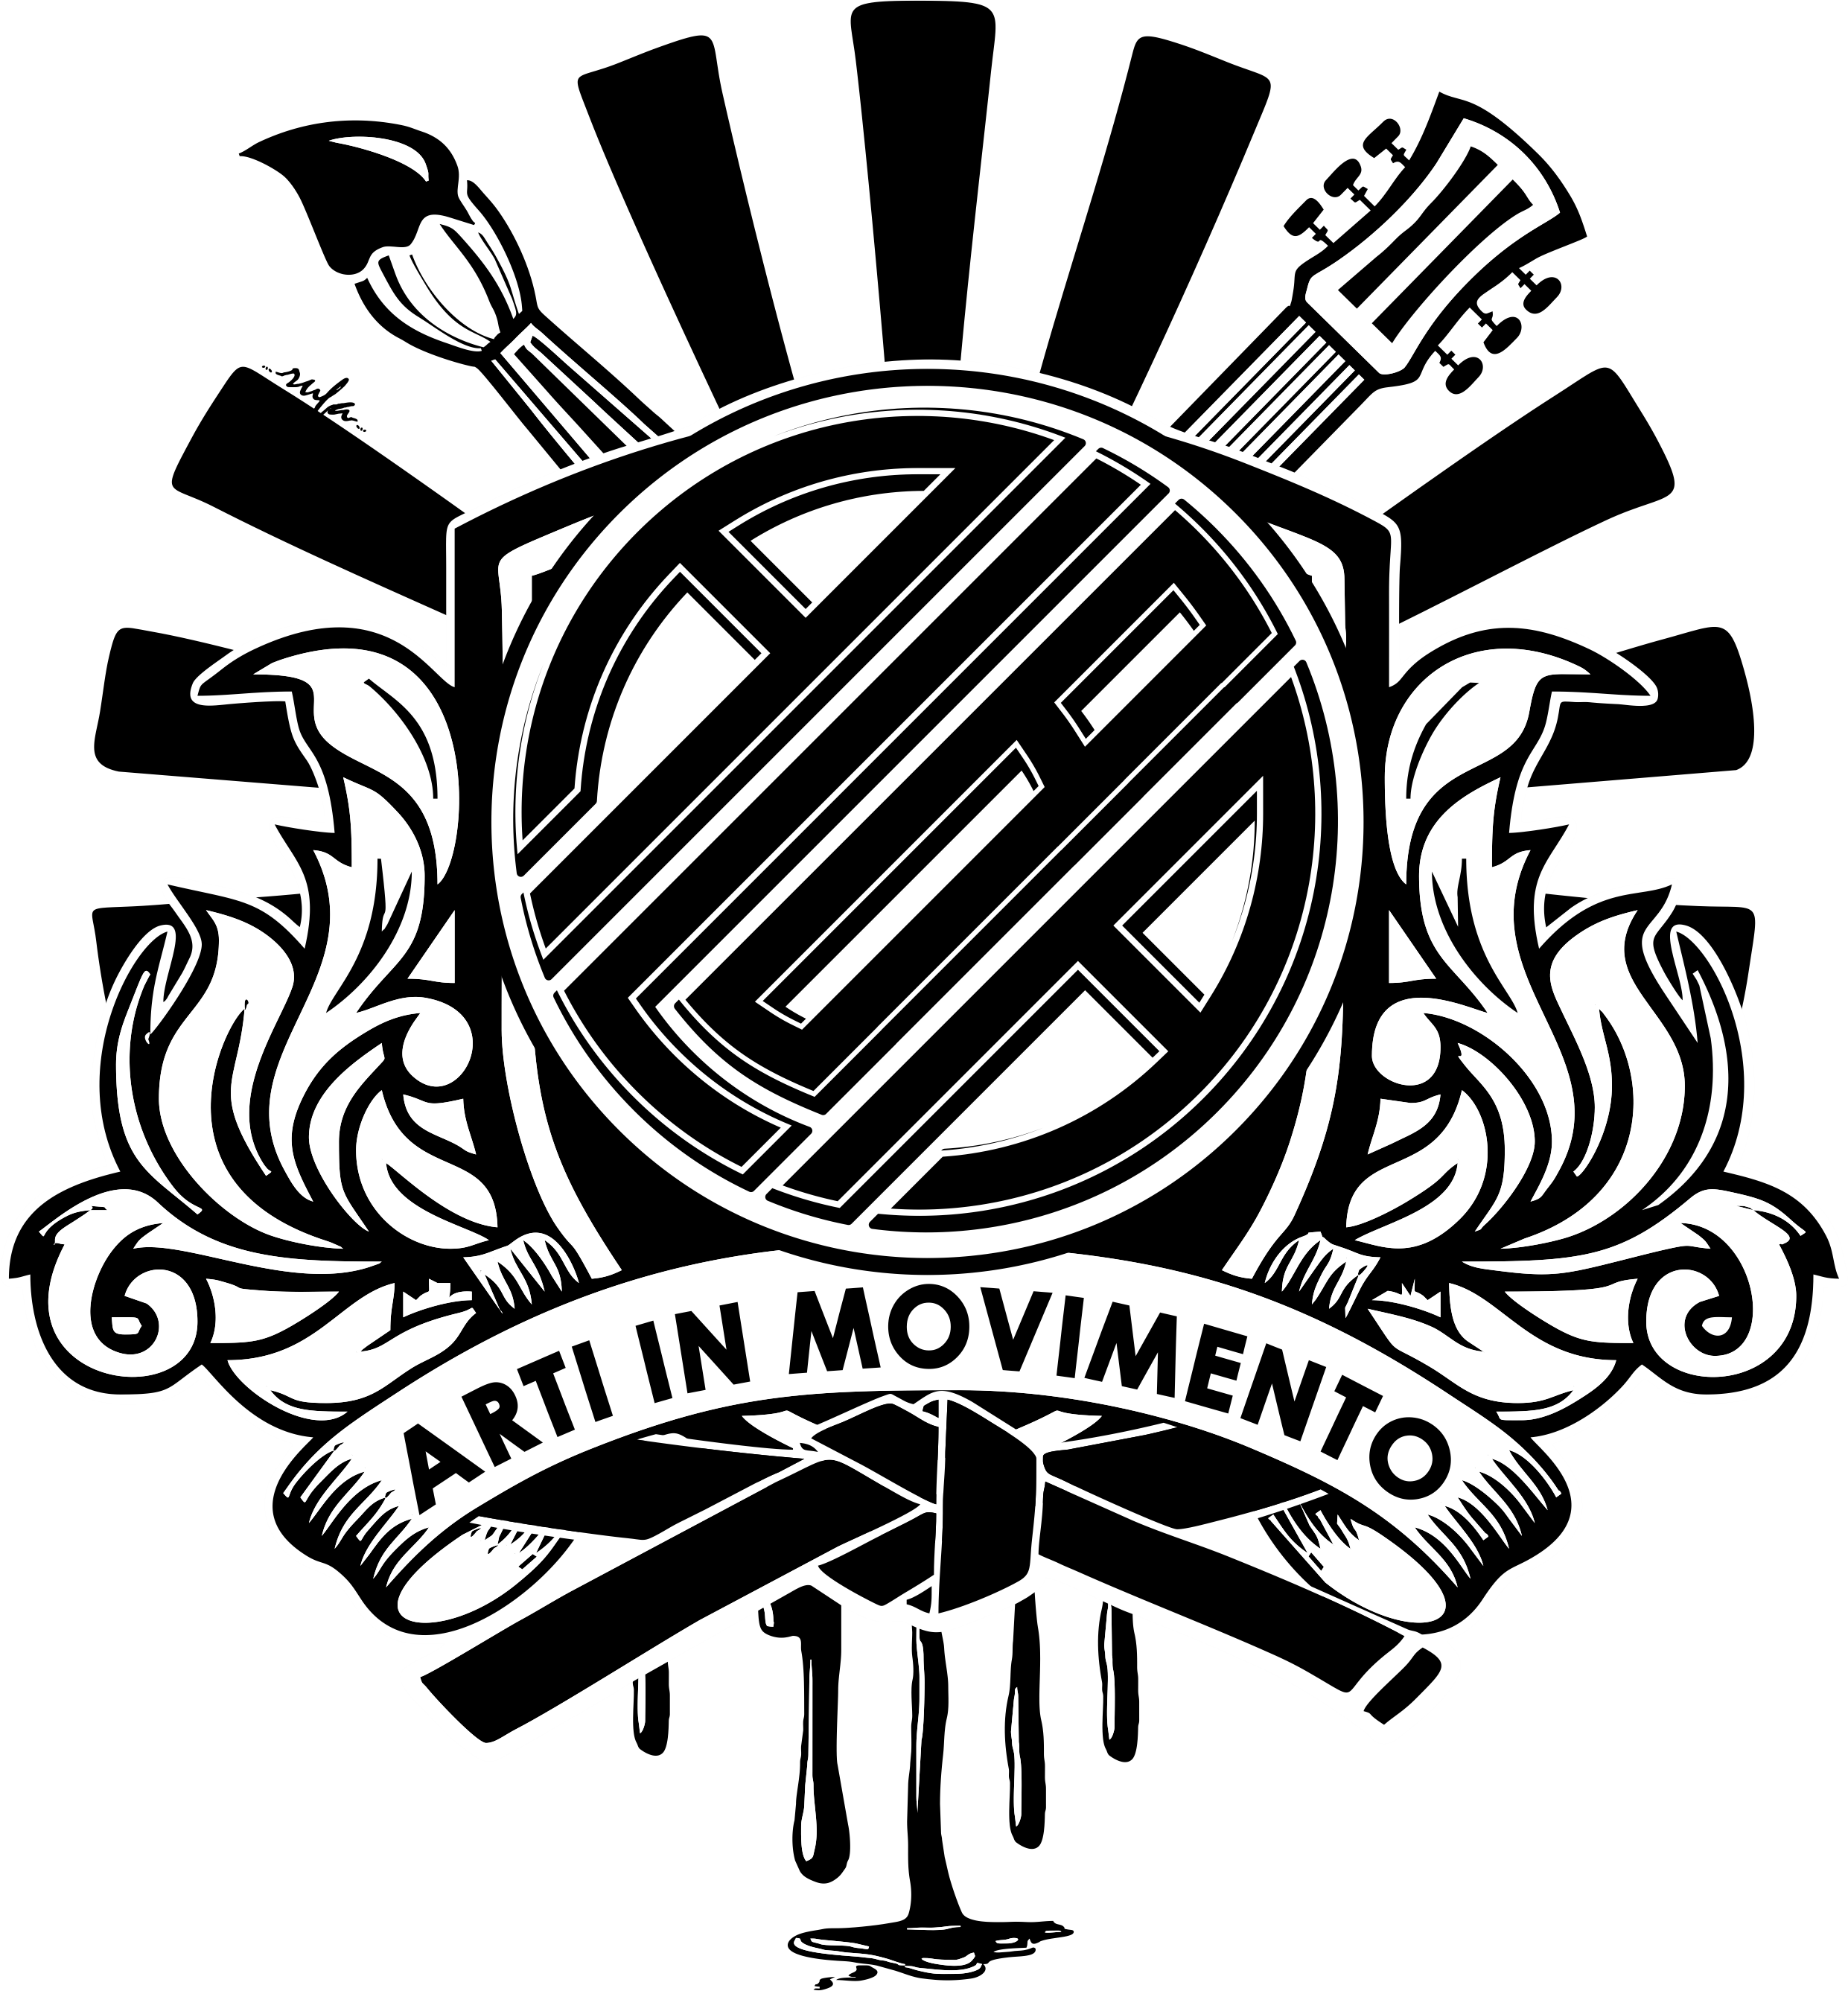 //www.albartinmovimento.it/wp-content/uploads/2020/07/logo-def-7.png